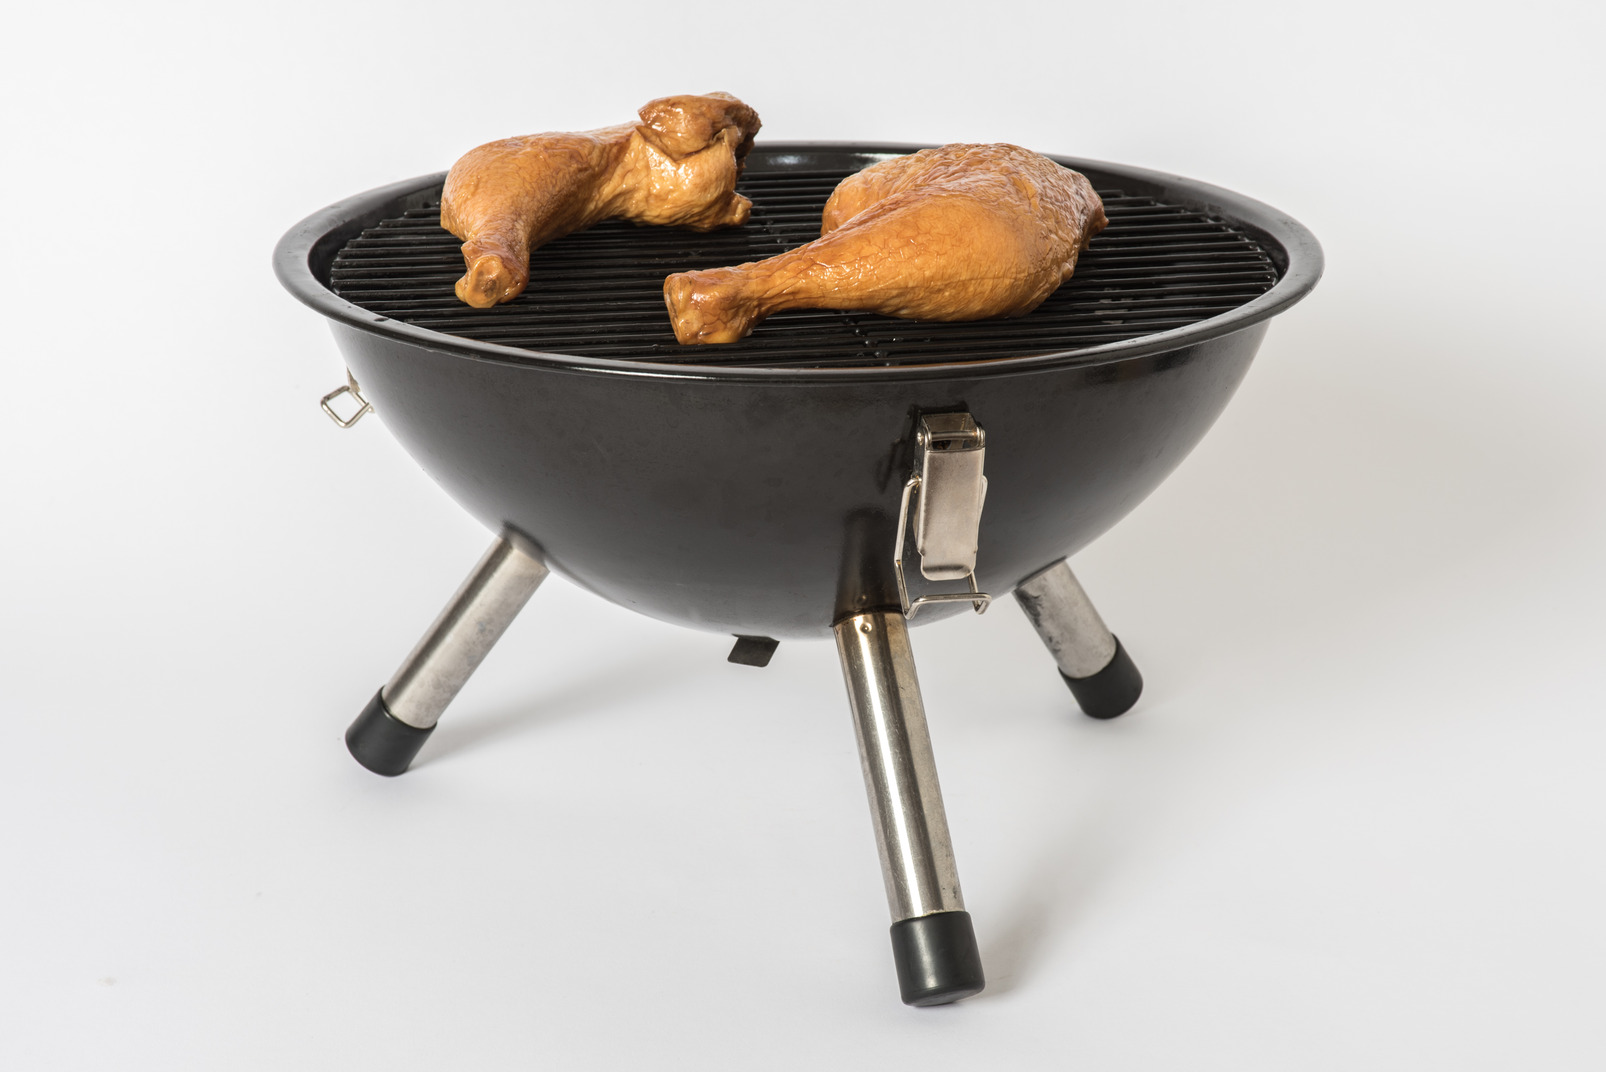 Fried chicken legs on grill